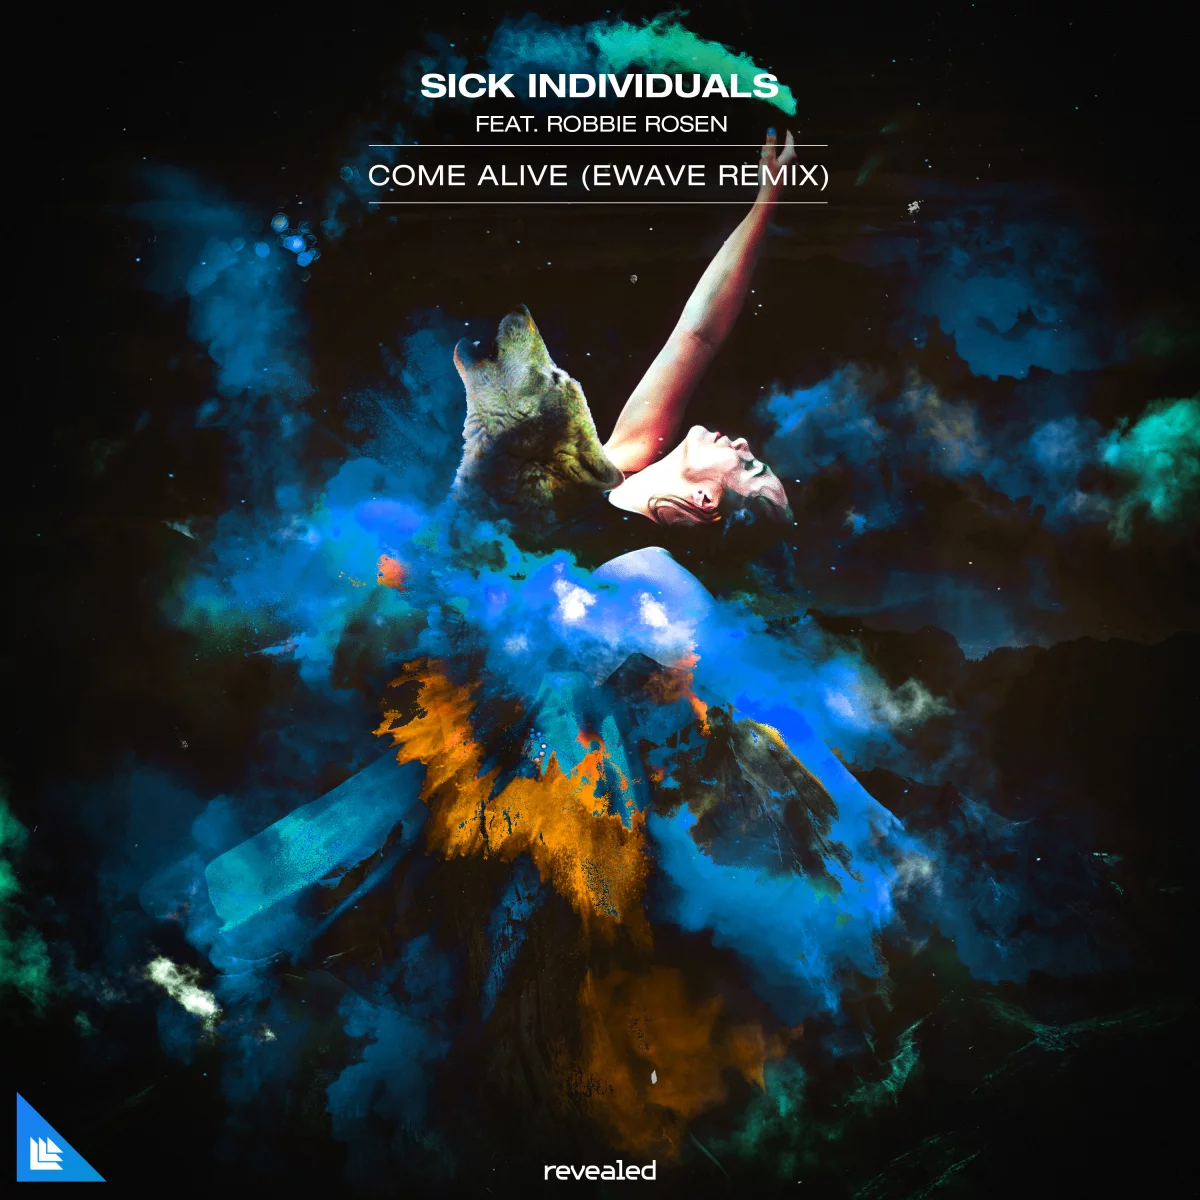 Come Alive (EWAVE Remix) - Sick Individuals⁠⁠ feat. Robbie Rosen⁠